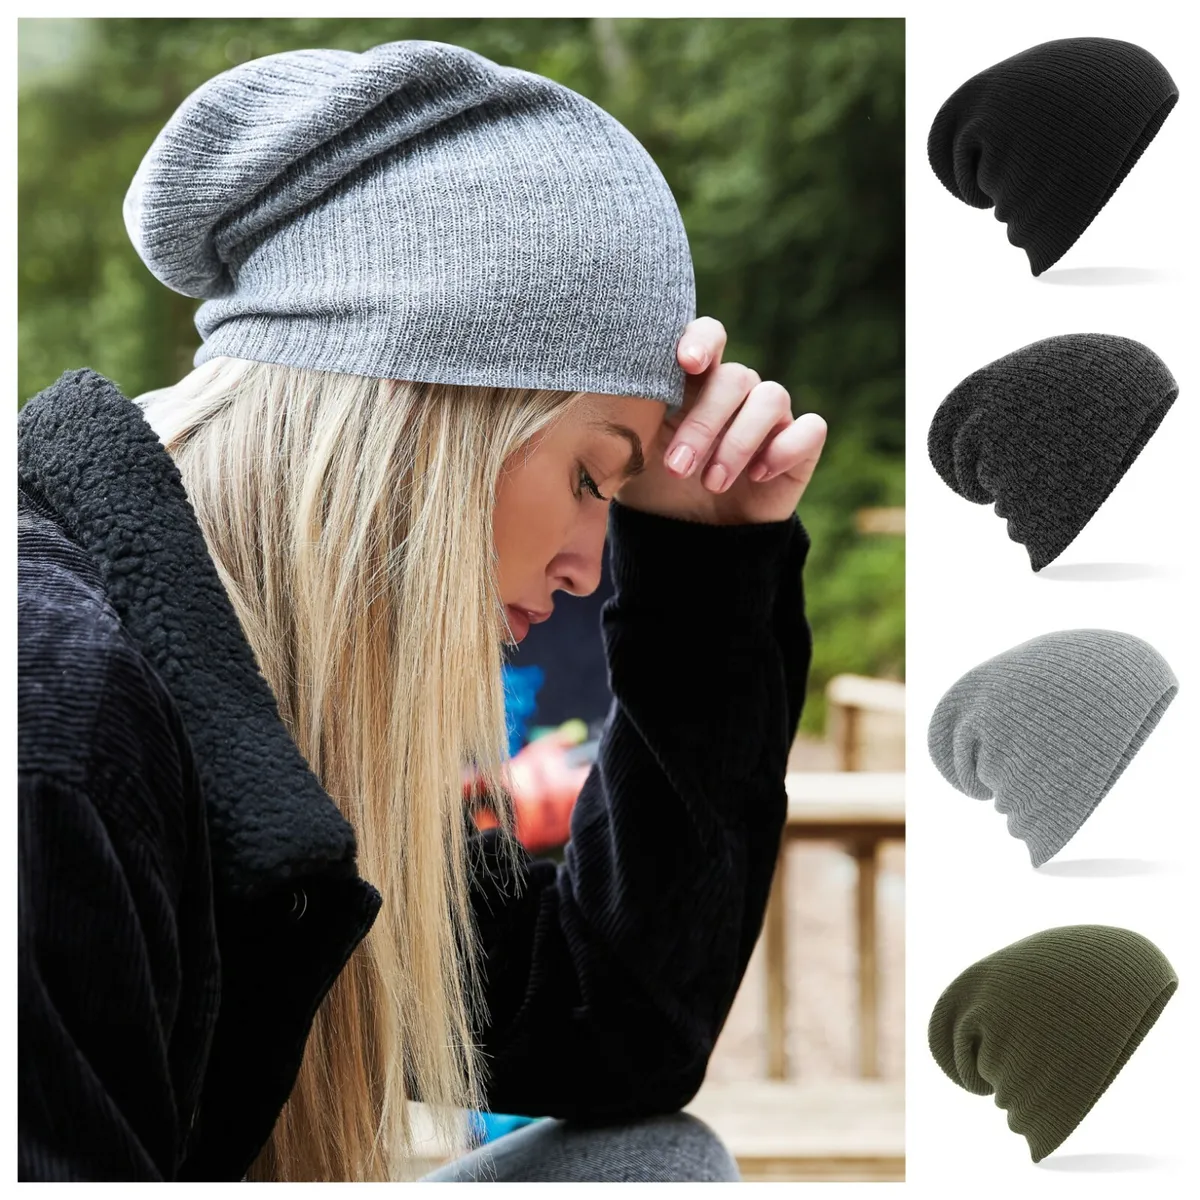 Urban Warm Winter | eBay Woolly Knit Hat Stretch Slouchy Oversized Beanie Slouch Skate